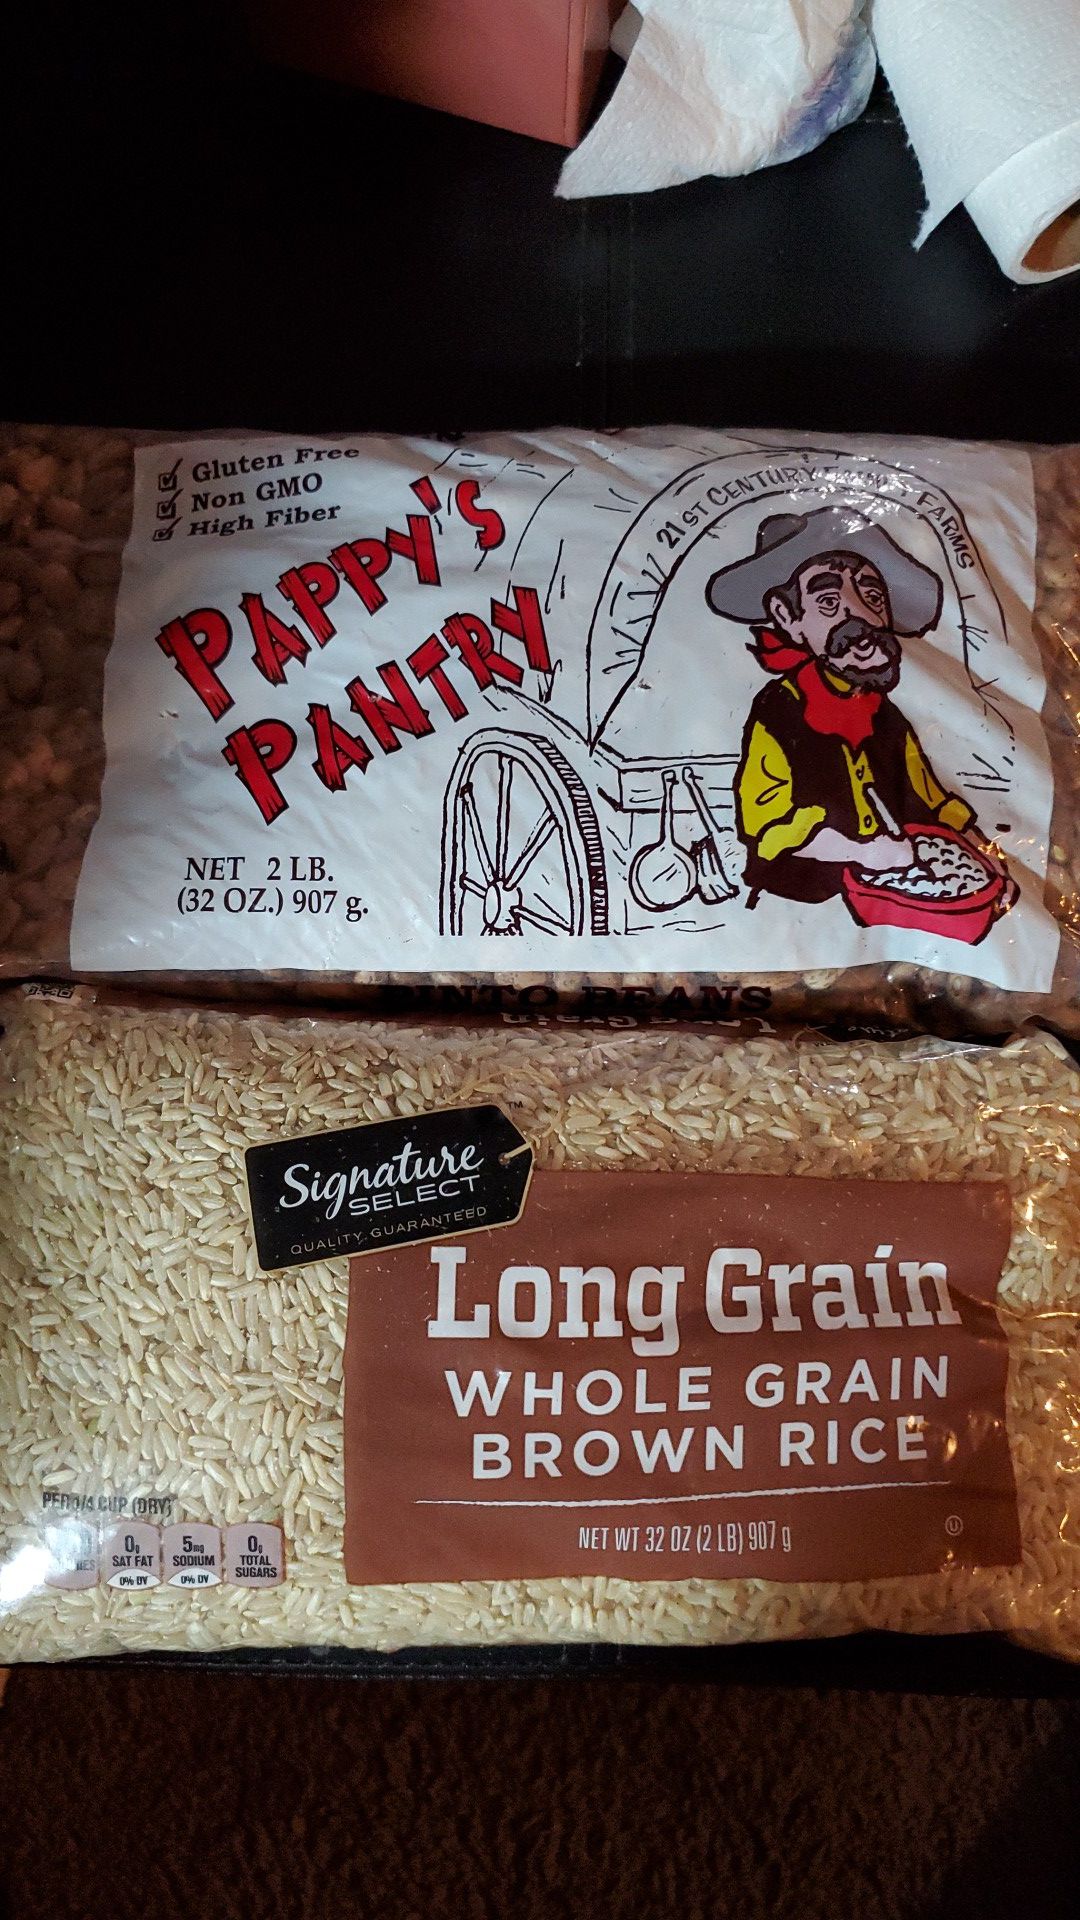 2 lb pinto beans / 2 lb long grain brown rice both for $2